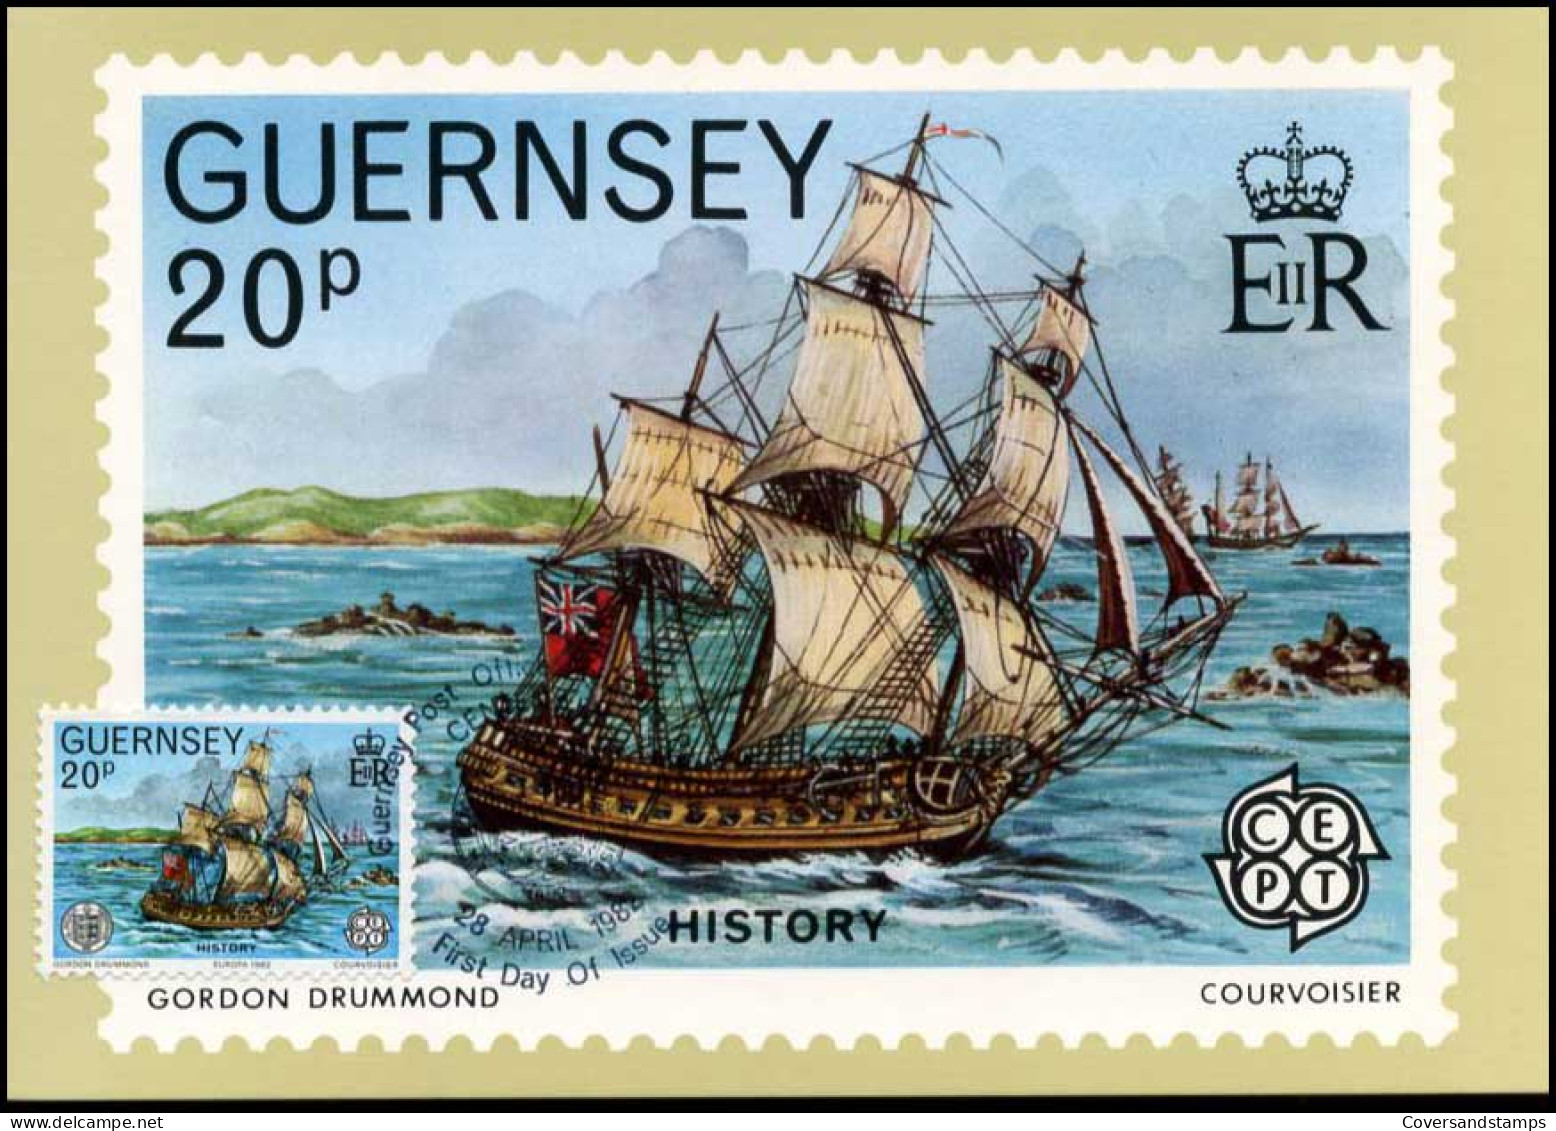  Guernsey - MK -  Europa 1982 - Guernsey